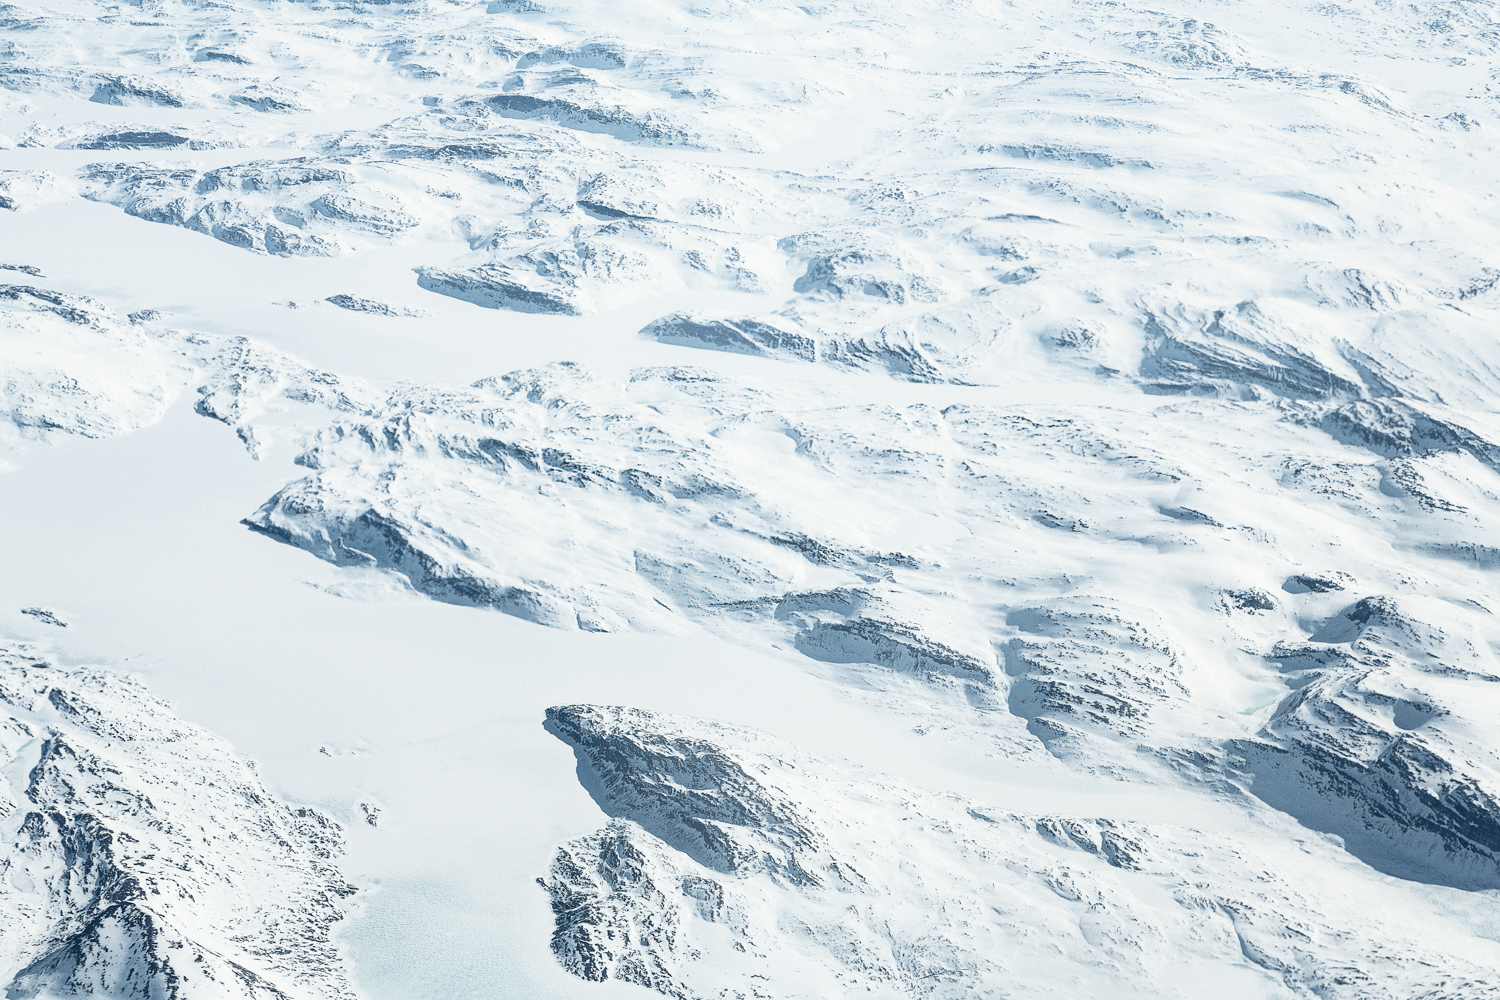  Greenland III, 2013 //  80 cm x 120 cm  